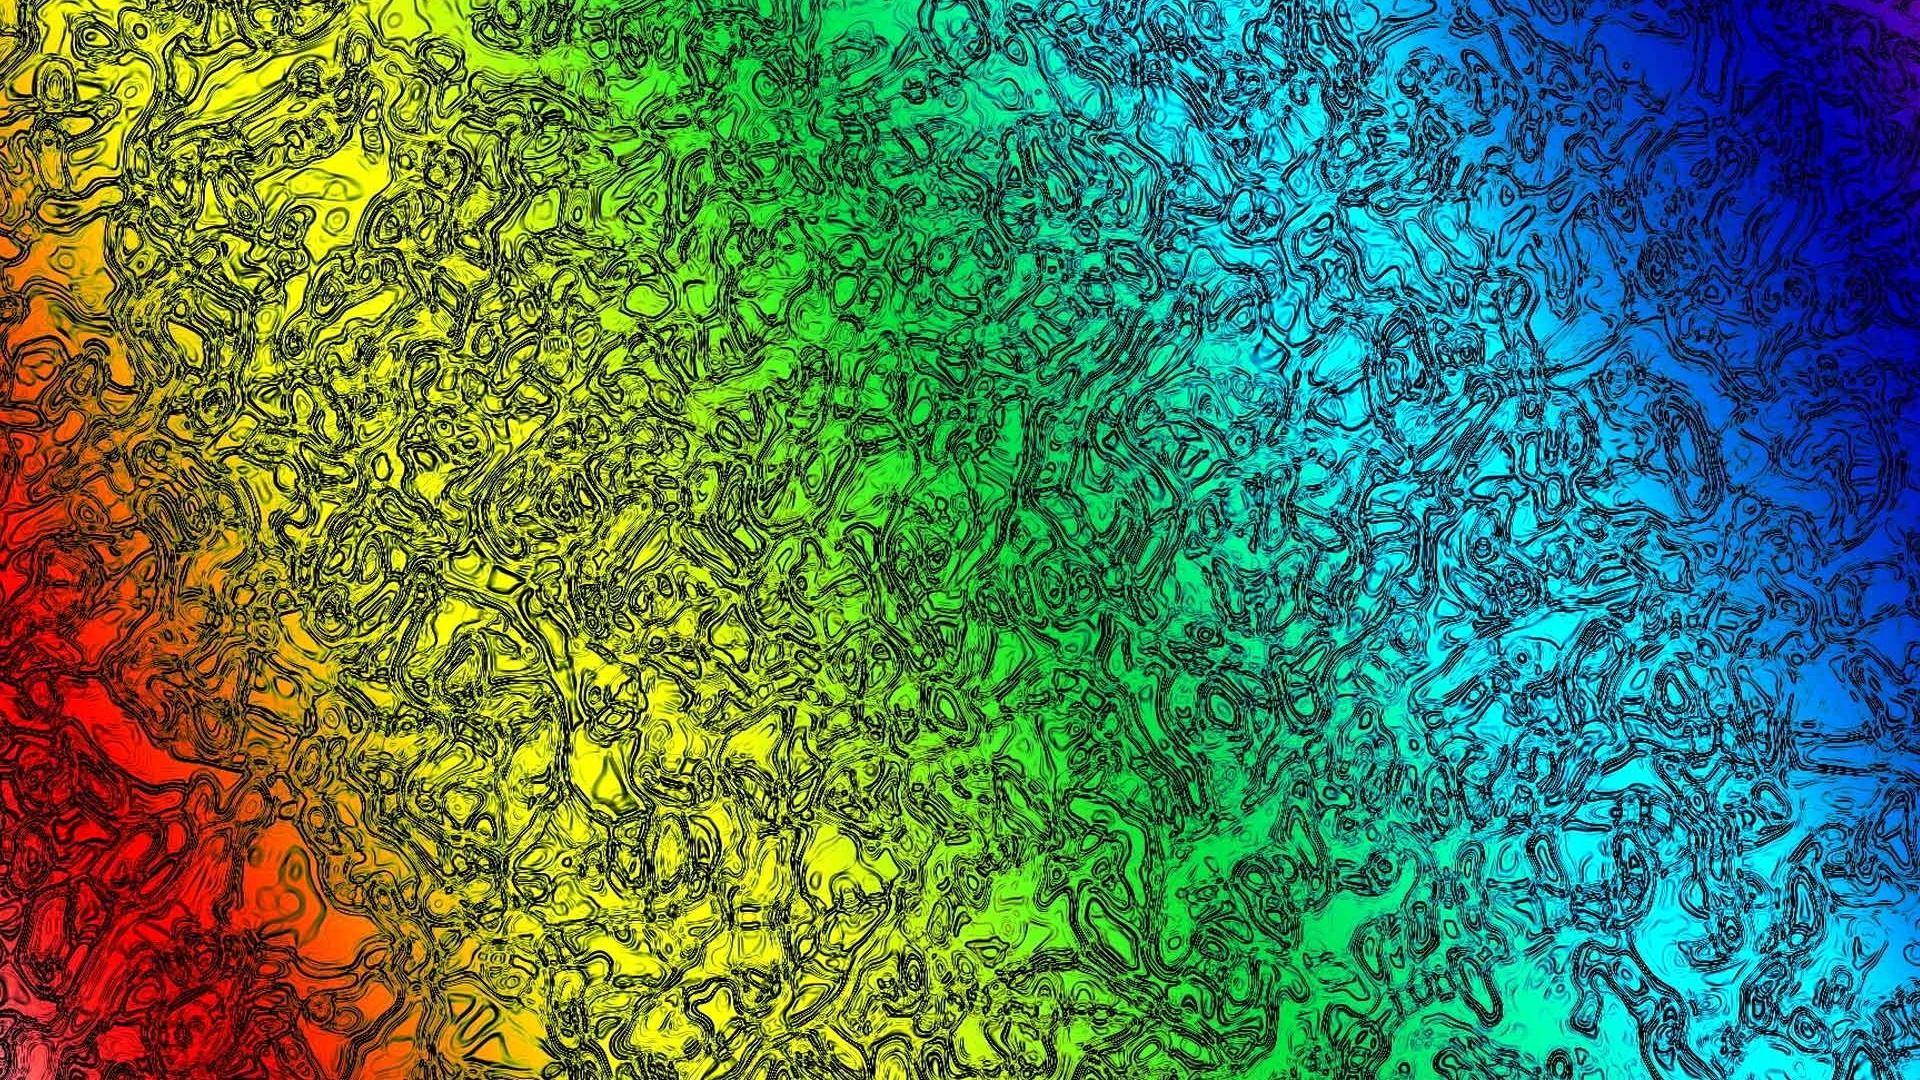 Hd Rainbow Desktop Wallpaper 1920x1080 Abstract